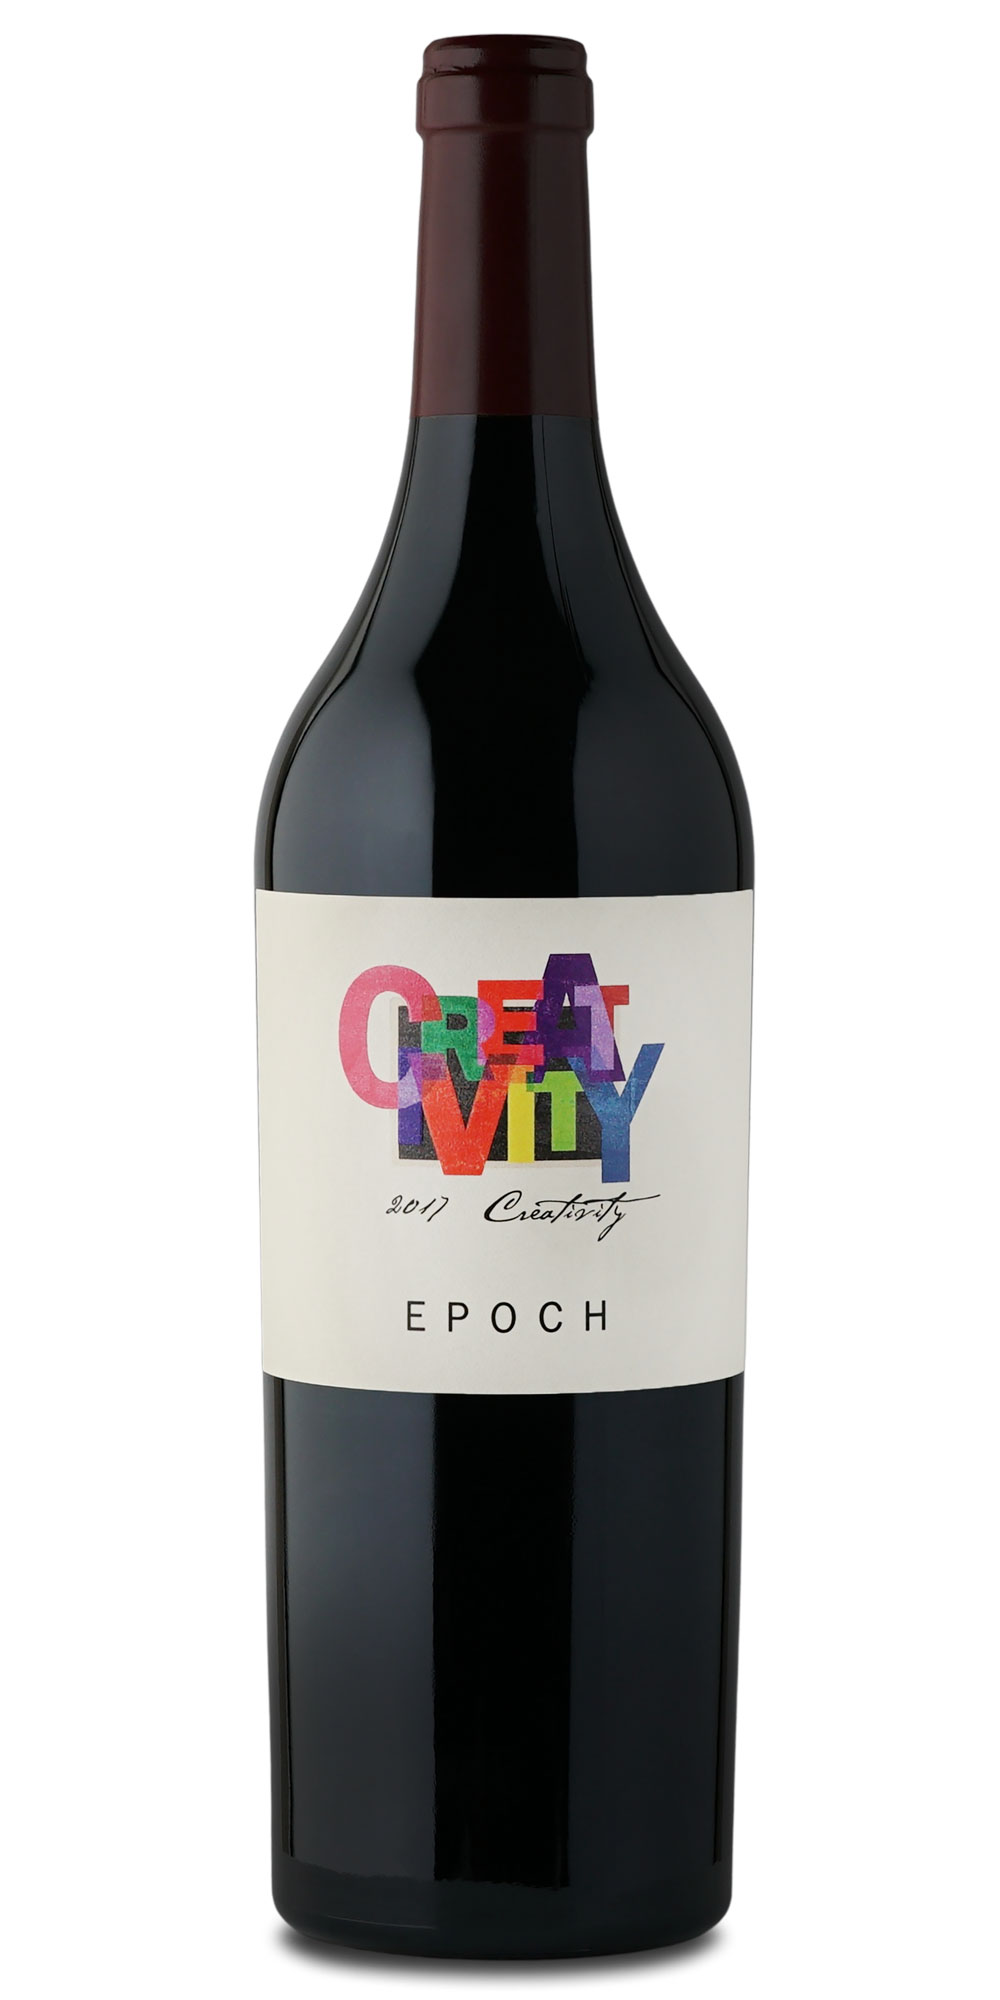 Bottle of 2017 Epoch Creativity